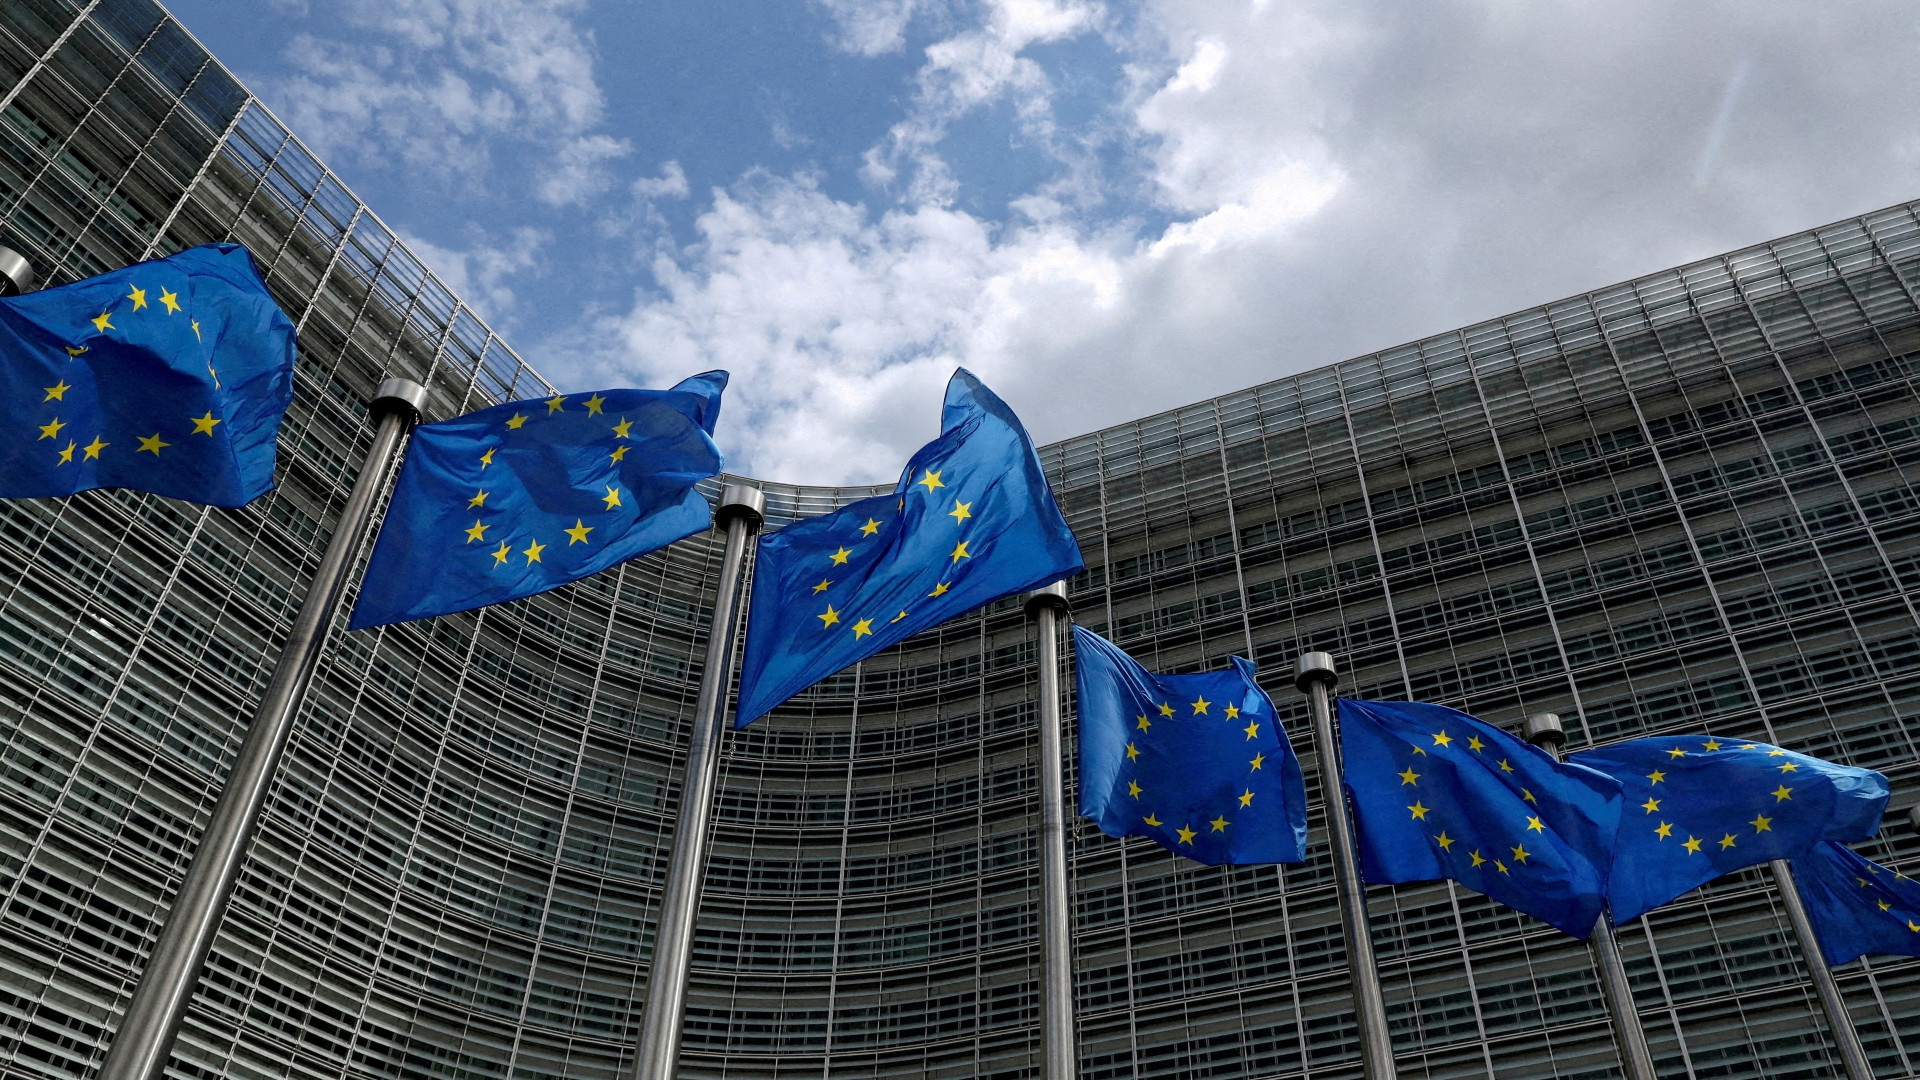 European Union flags flutter outside the European Commission headquarters in Brussels, Belgium, 5 June 2020 (Reuters)